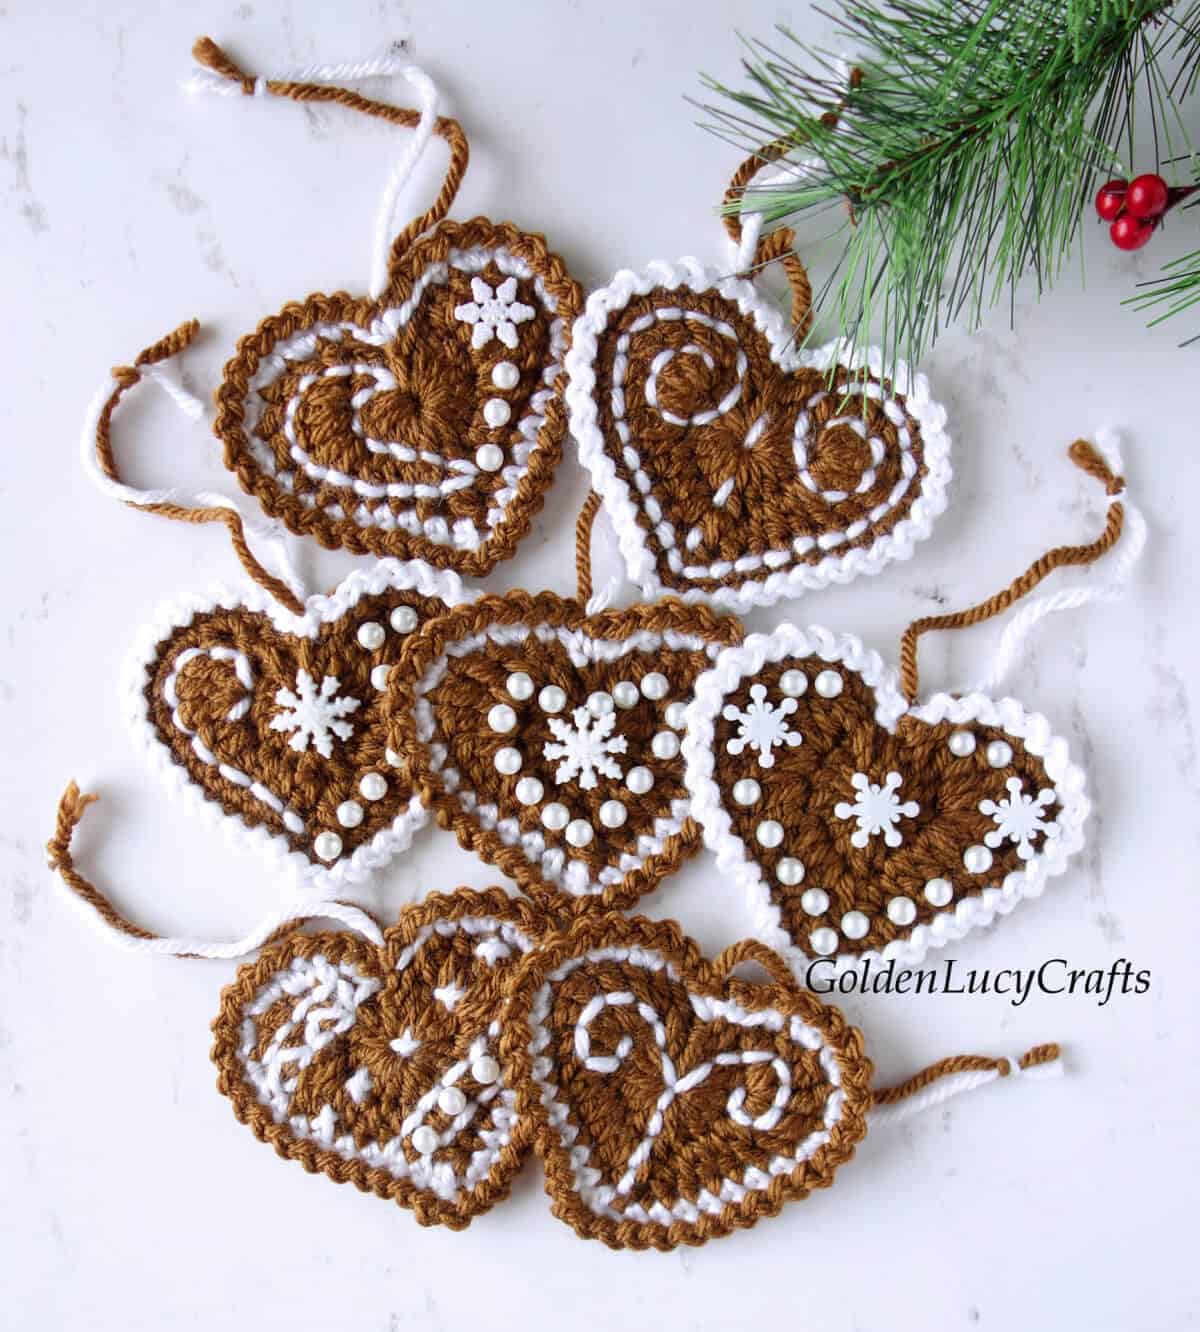 Six crocheted gingerbread hearts Christmas ornaments.